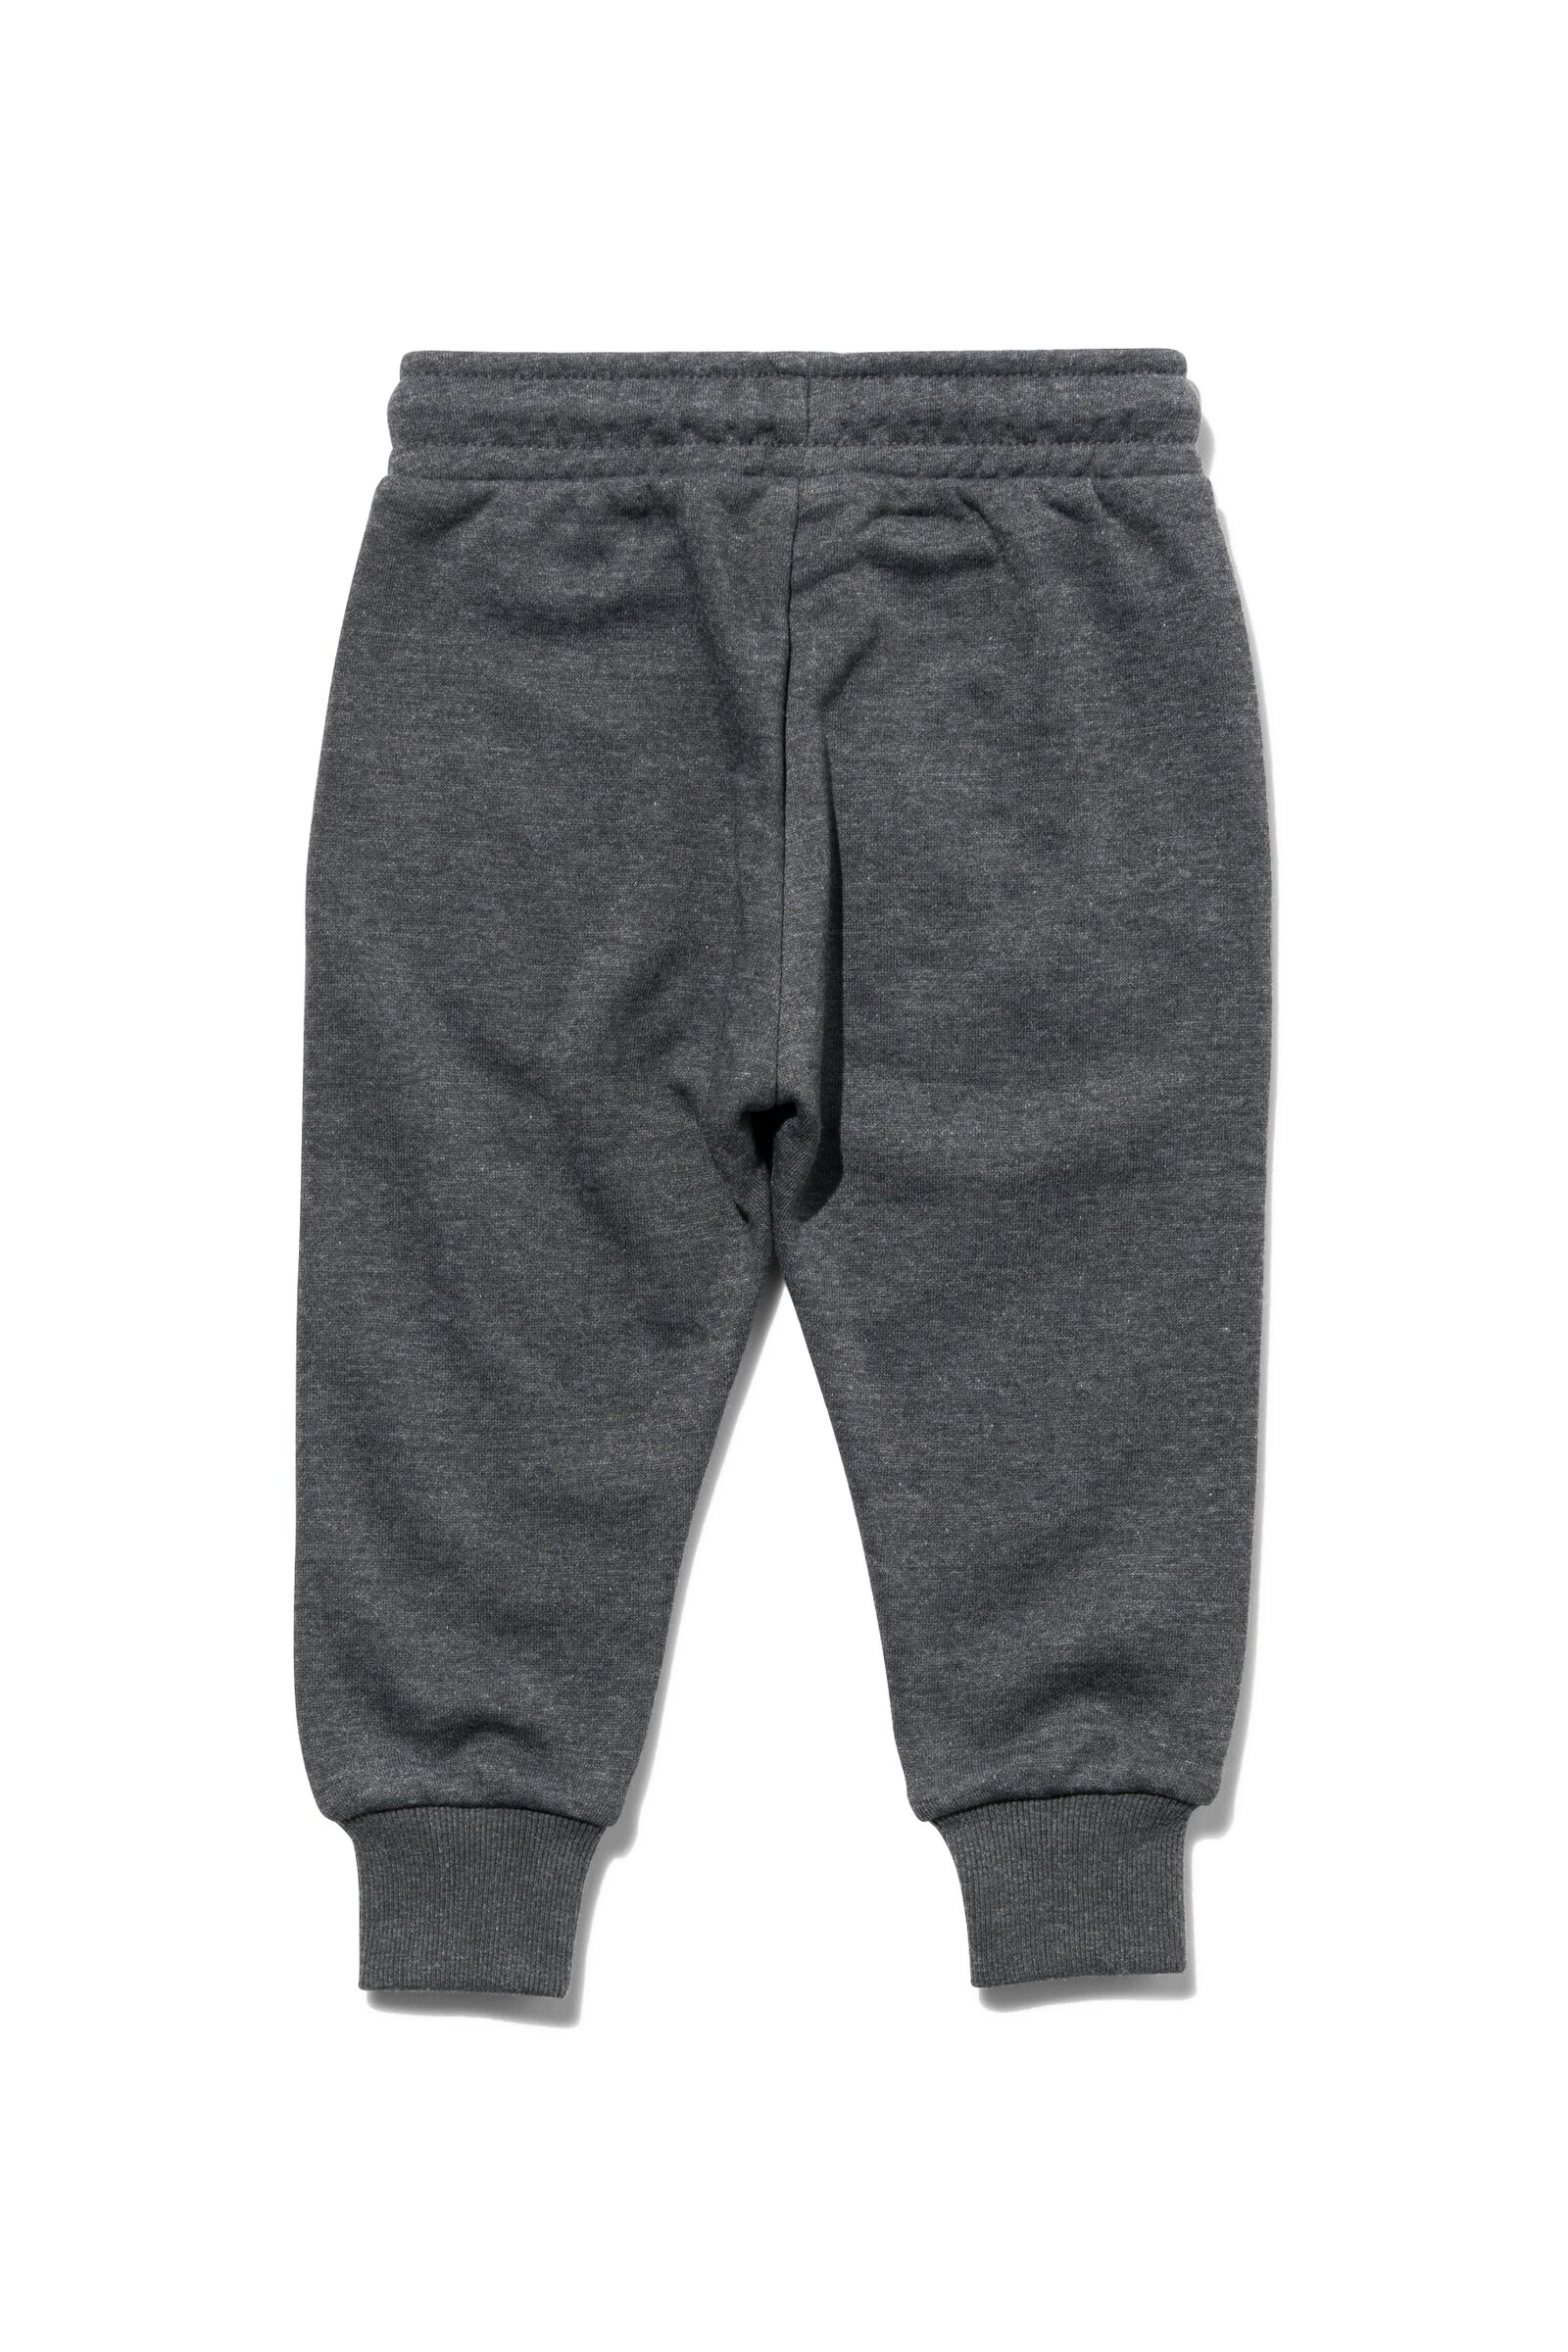 pantalon sweat bébé gris foncé 98 - 33171049 - HEMA